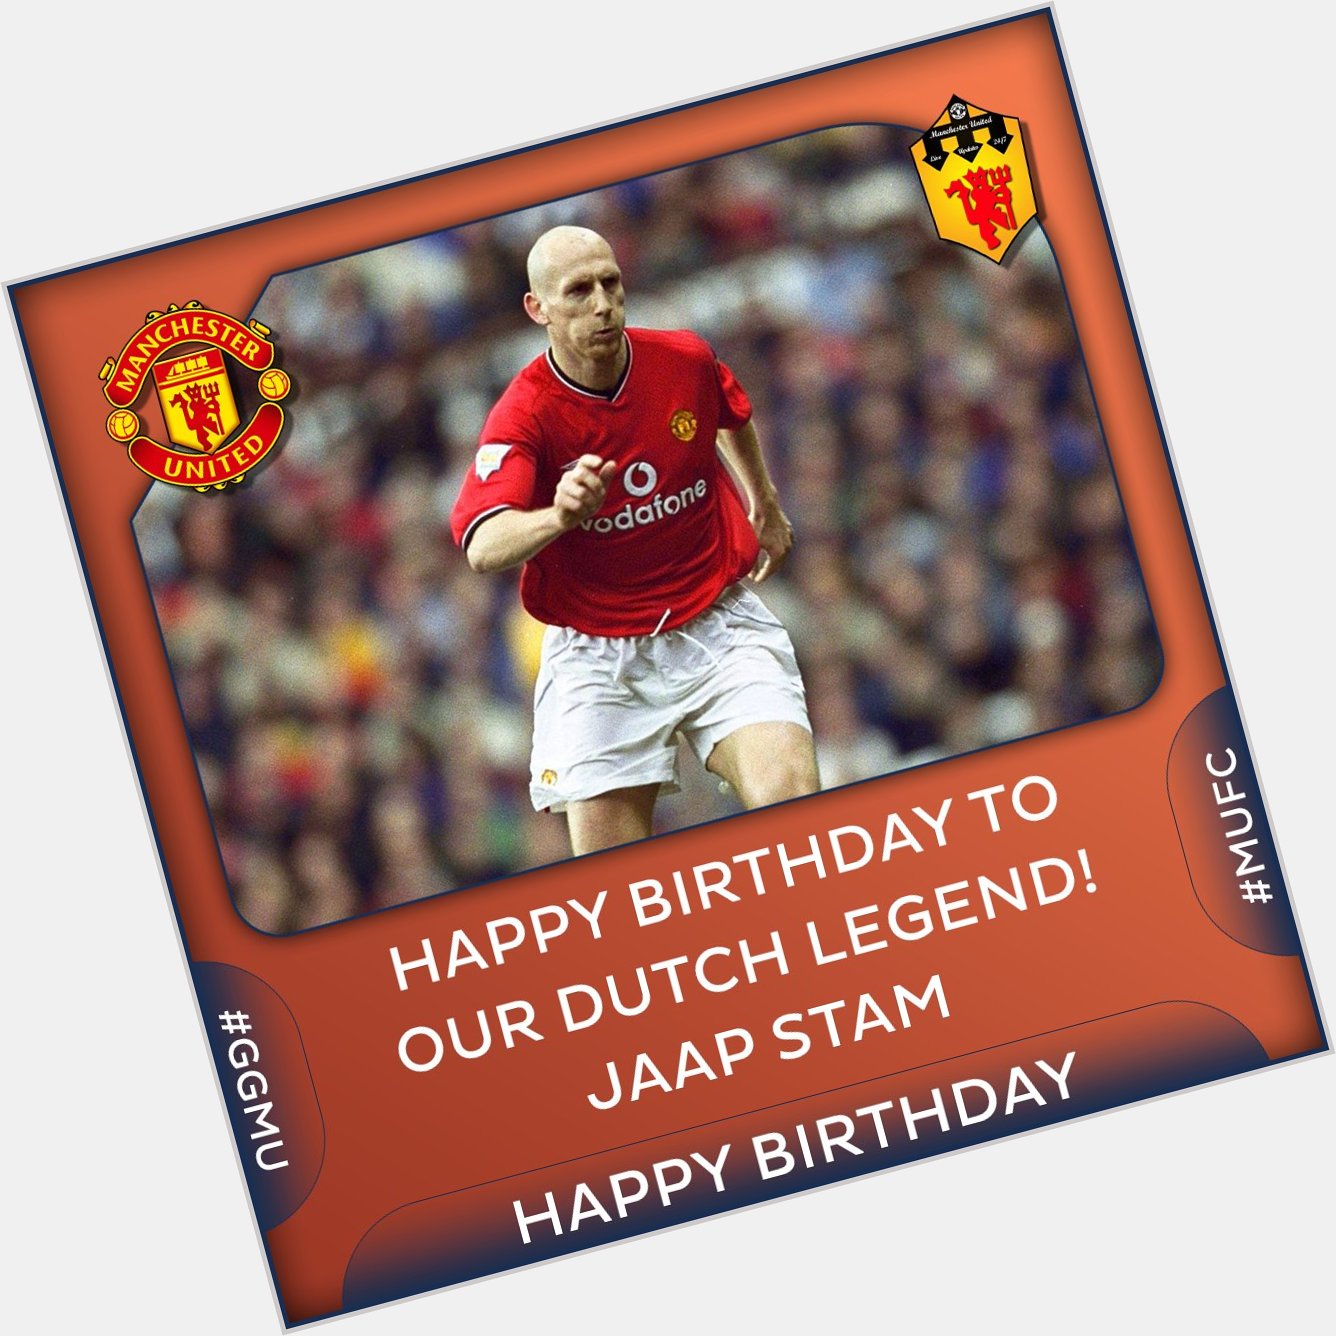  Happy Birthday to our Dutchman!
Jip Jap, Jaap Stam!  